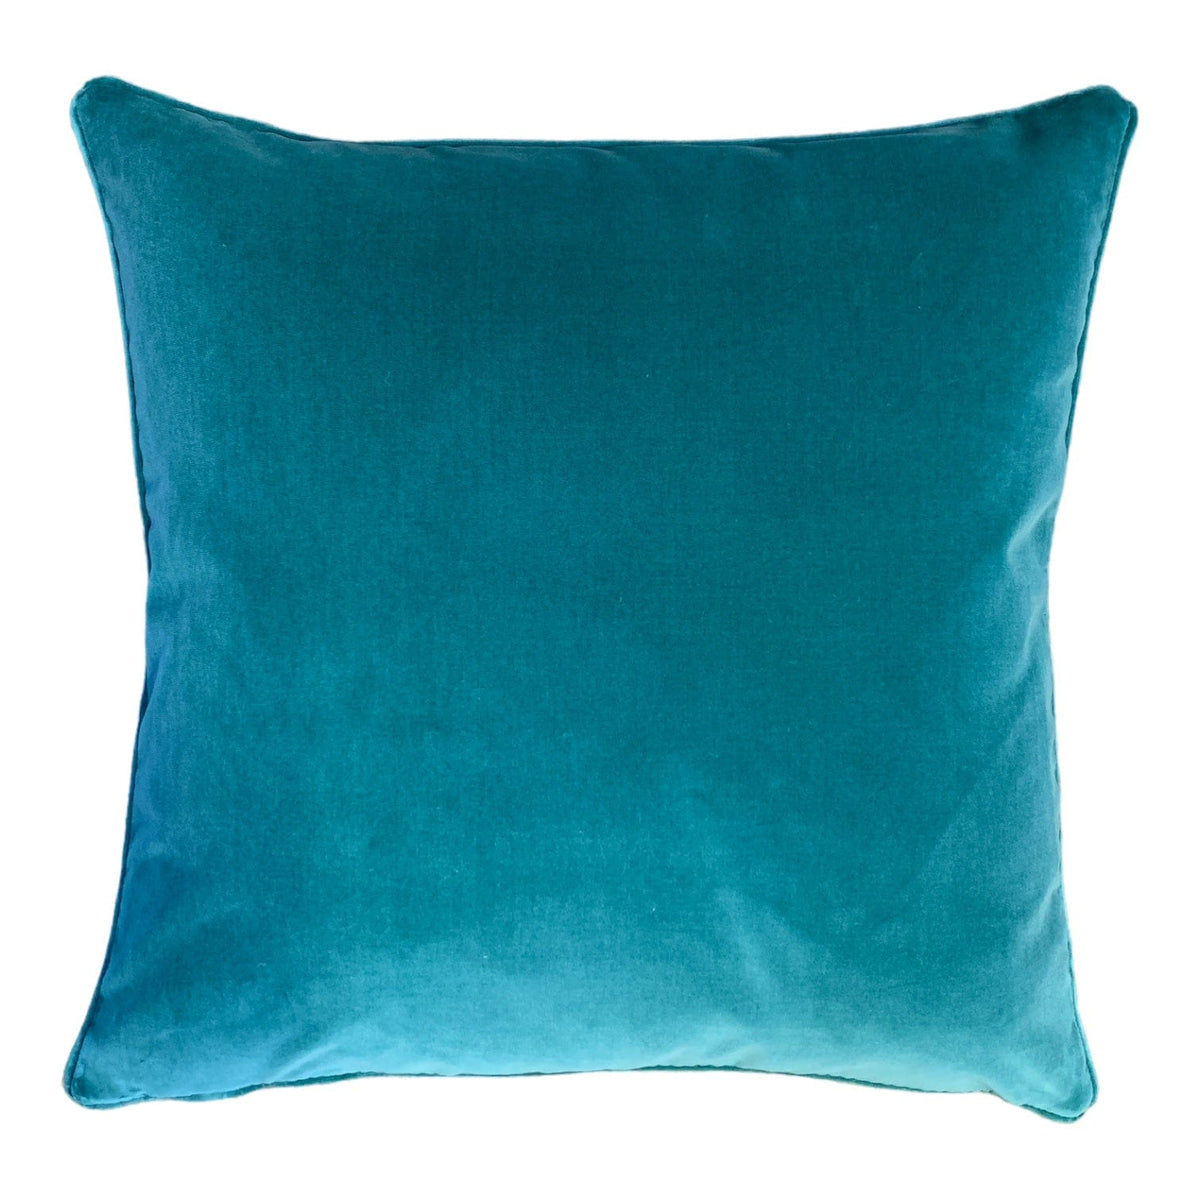    Seasalt-Cotton-Velvet-55x55cm-Piped-Cushion-Little-and-Fox